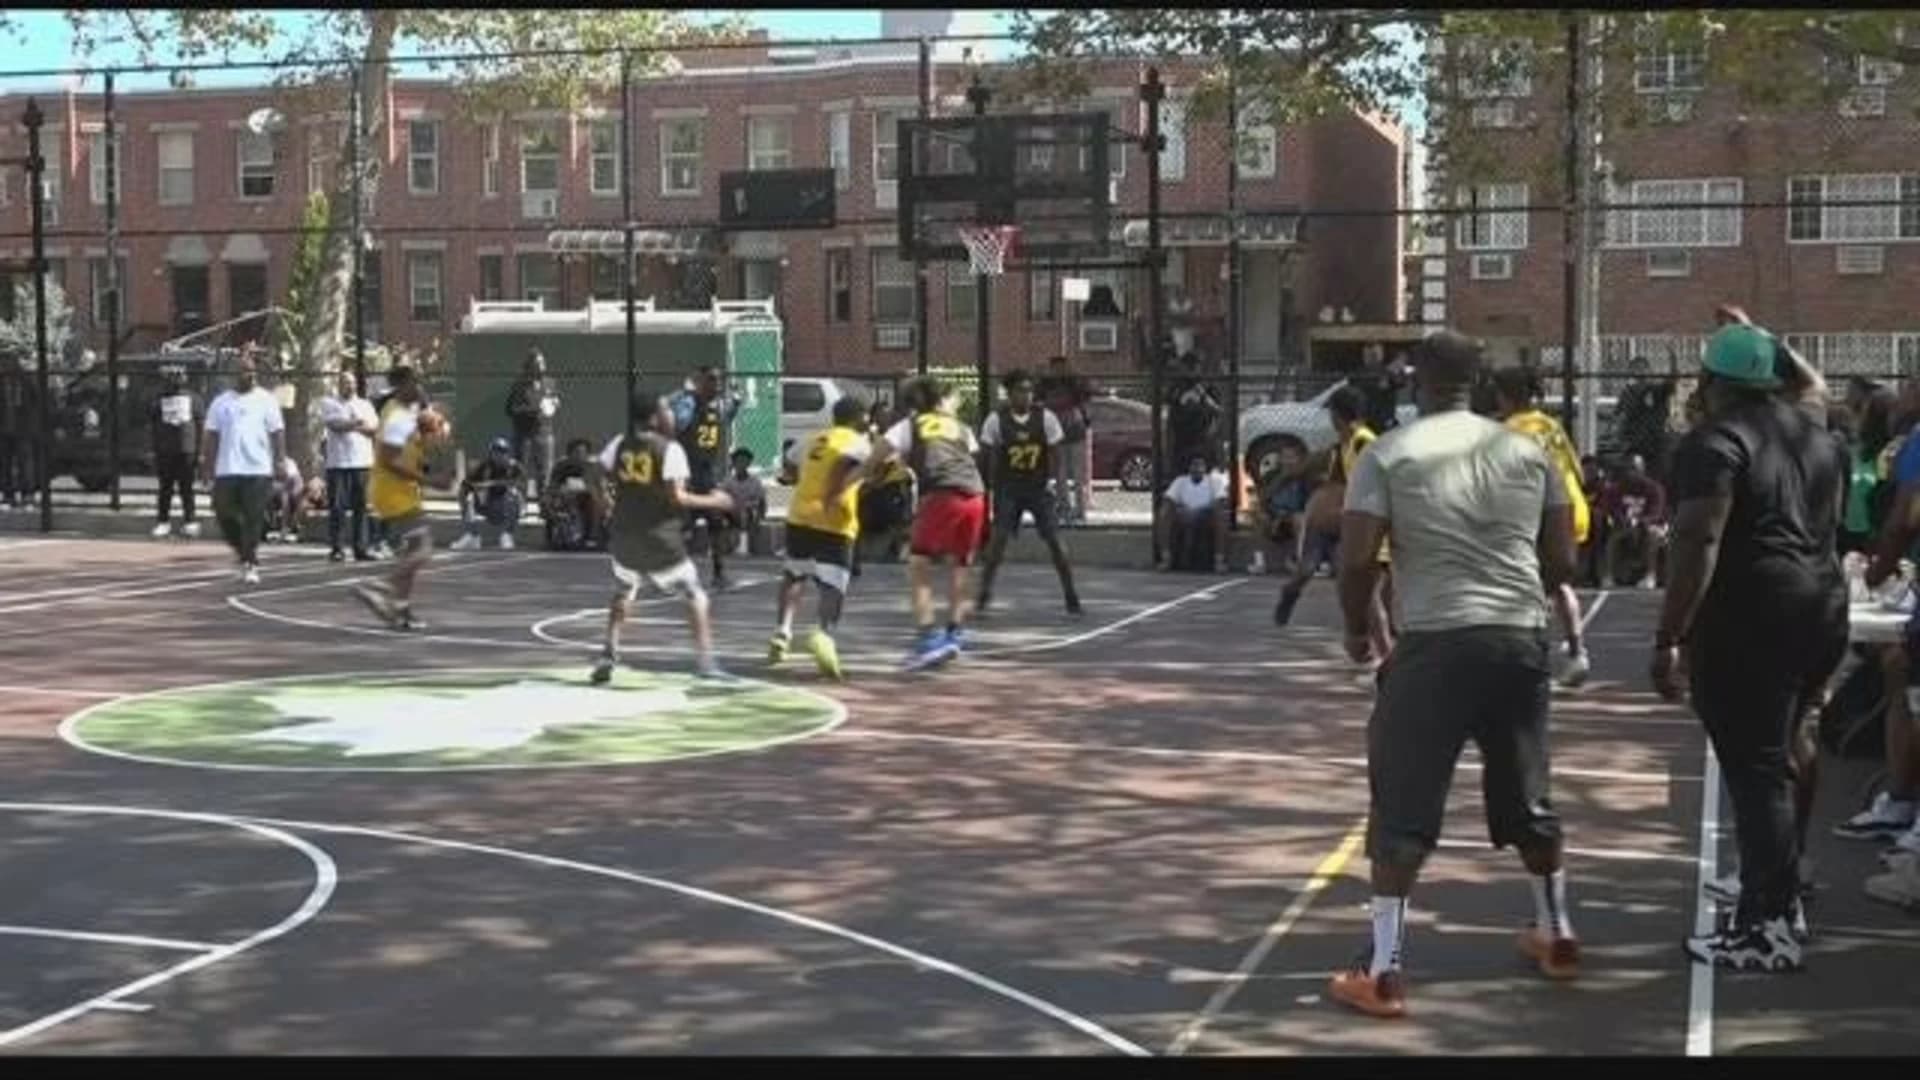 Brownsville basketball court renamed to honor slain teen